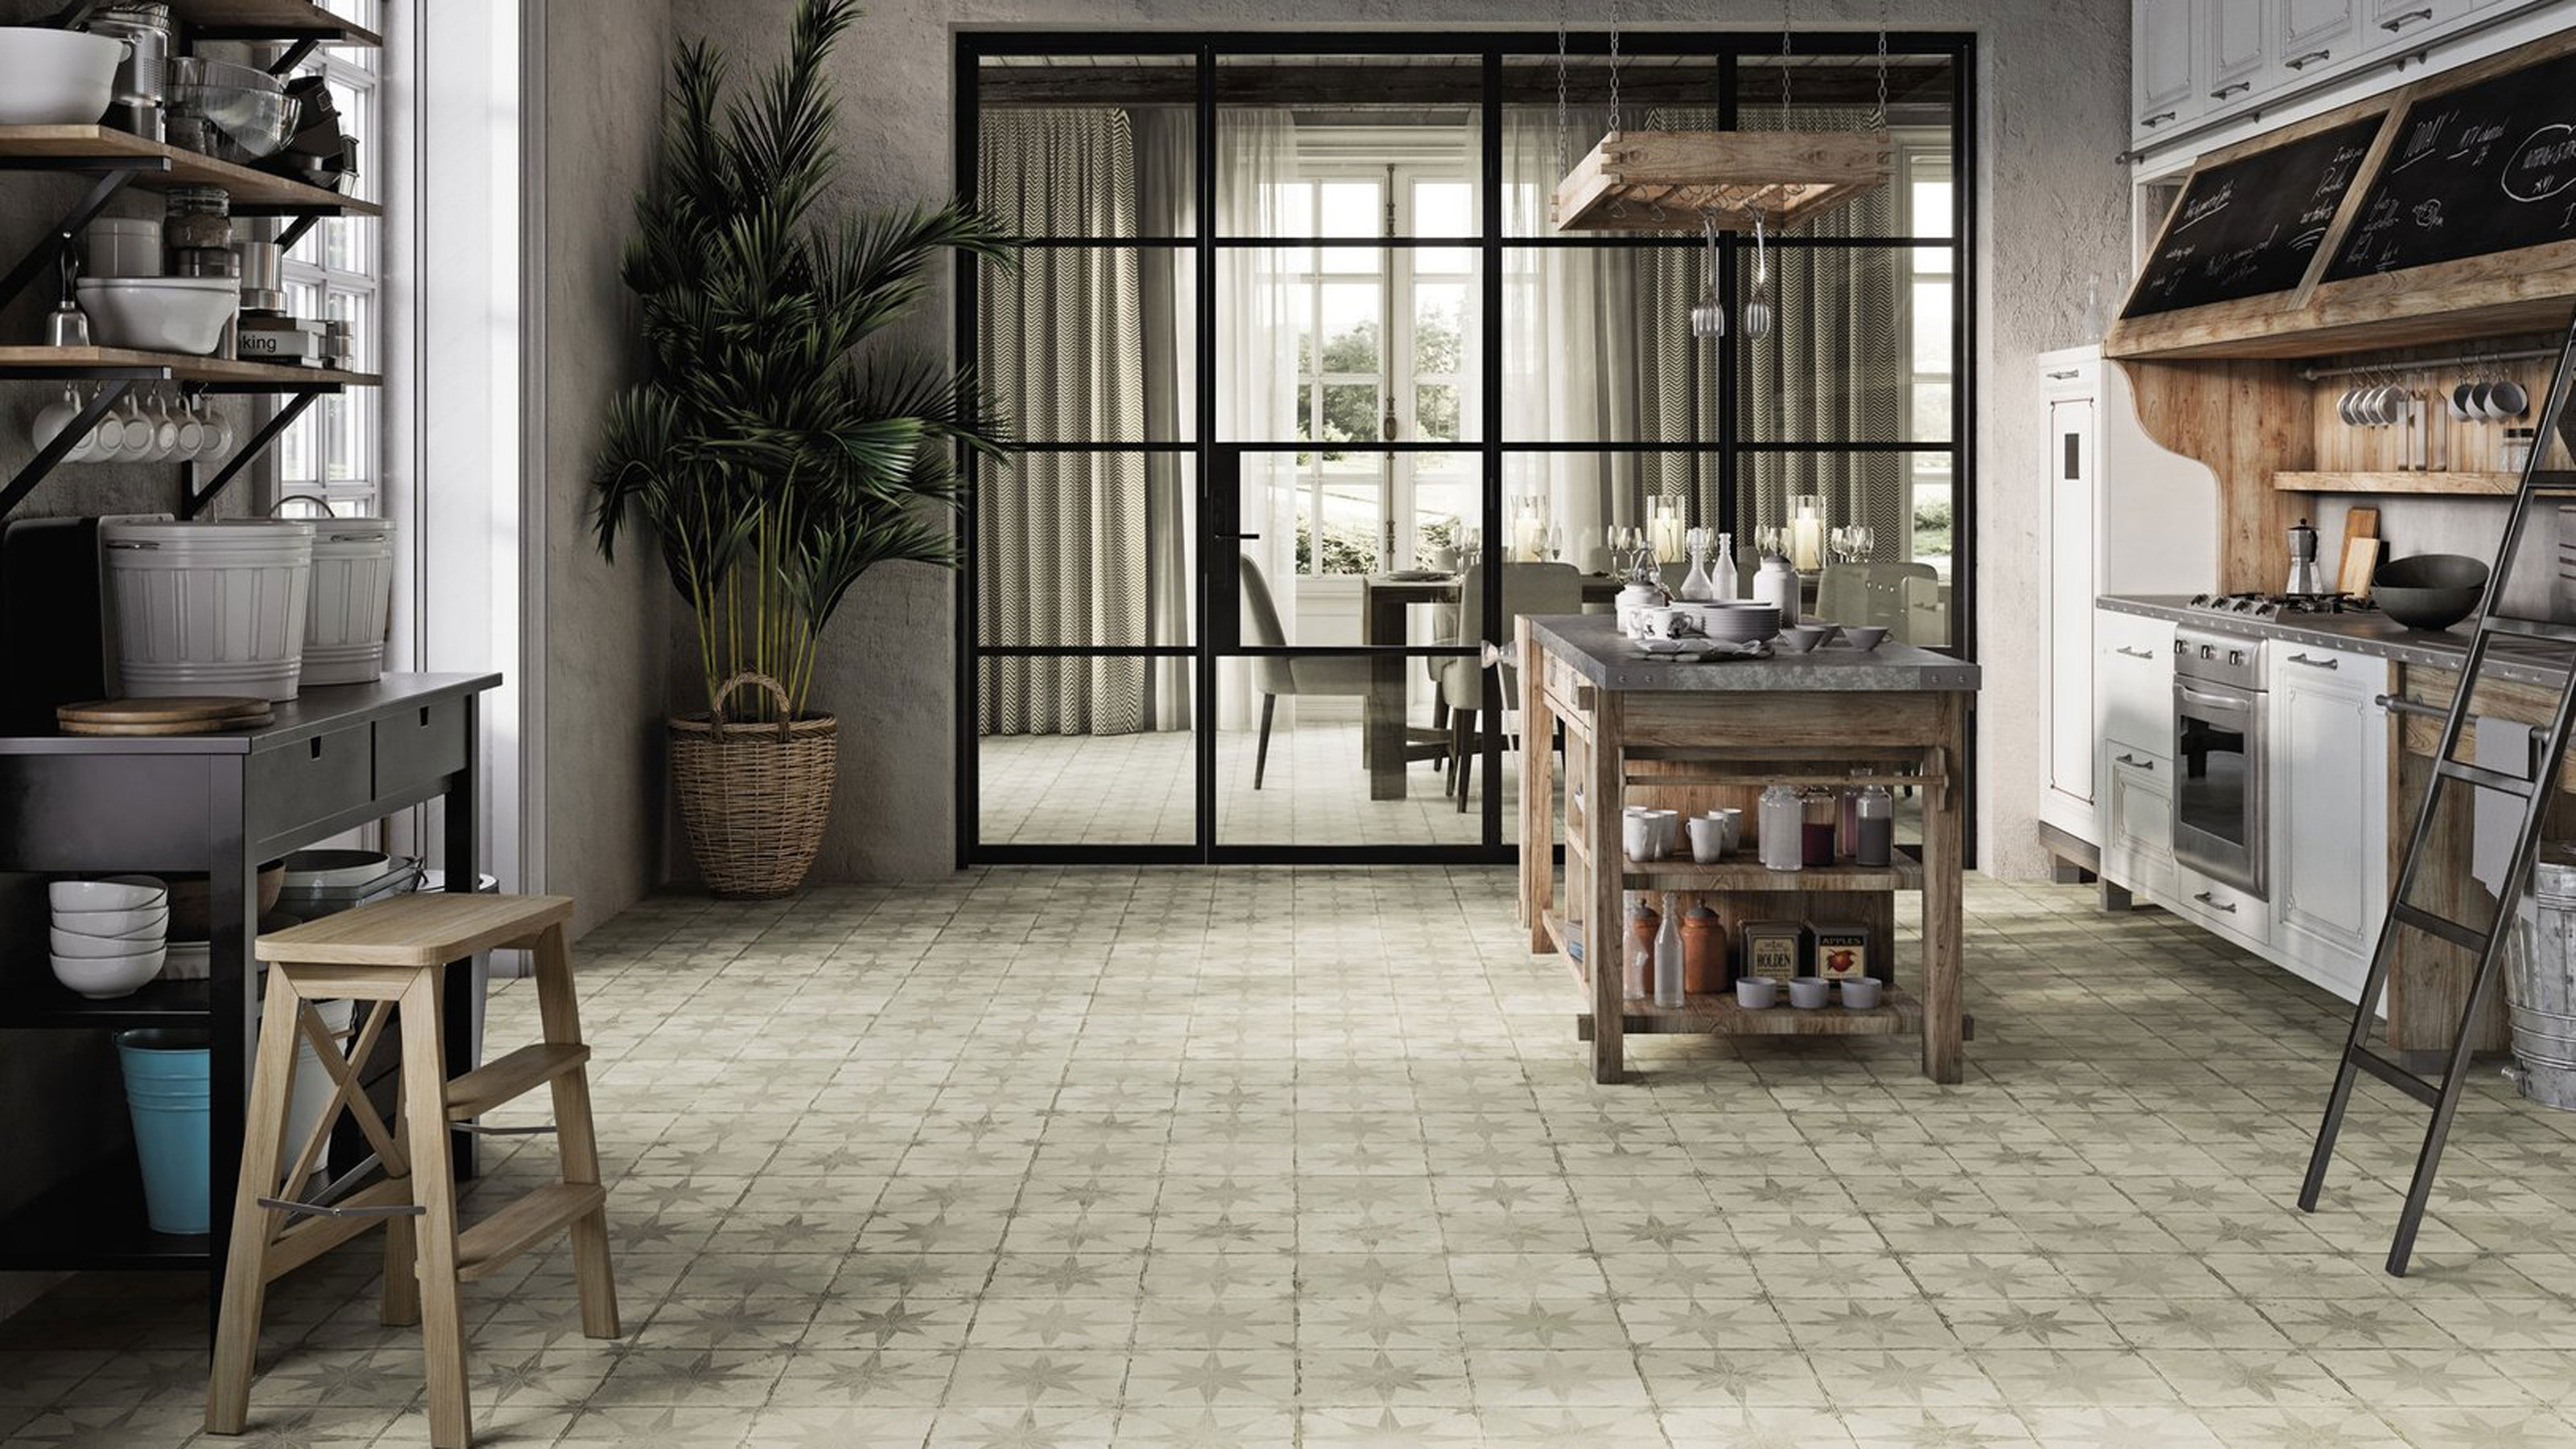 Kitchen floor tile ideas – 16 stylish tile designs for kitchen floors |  Real Homes